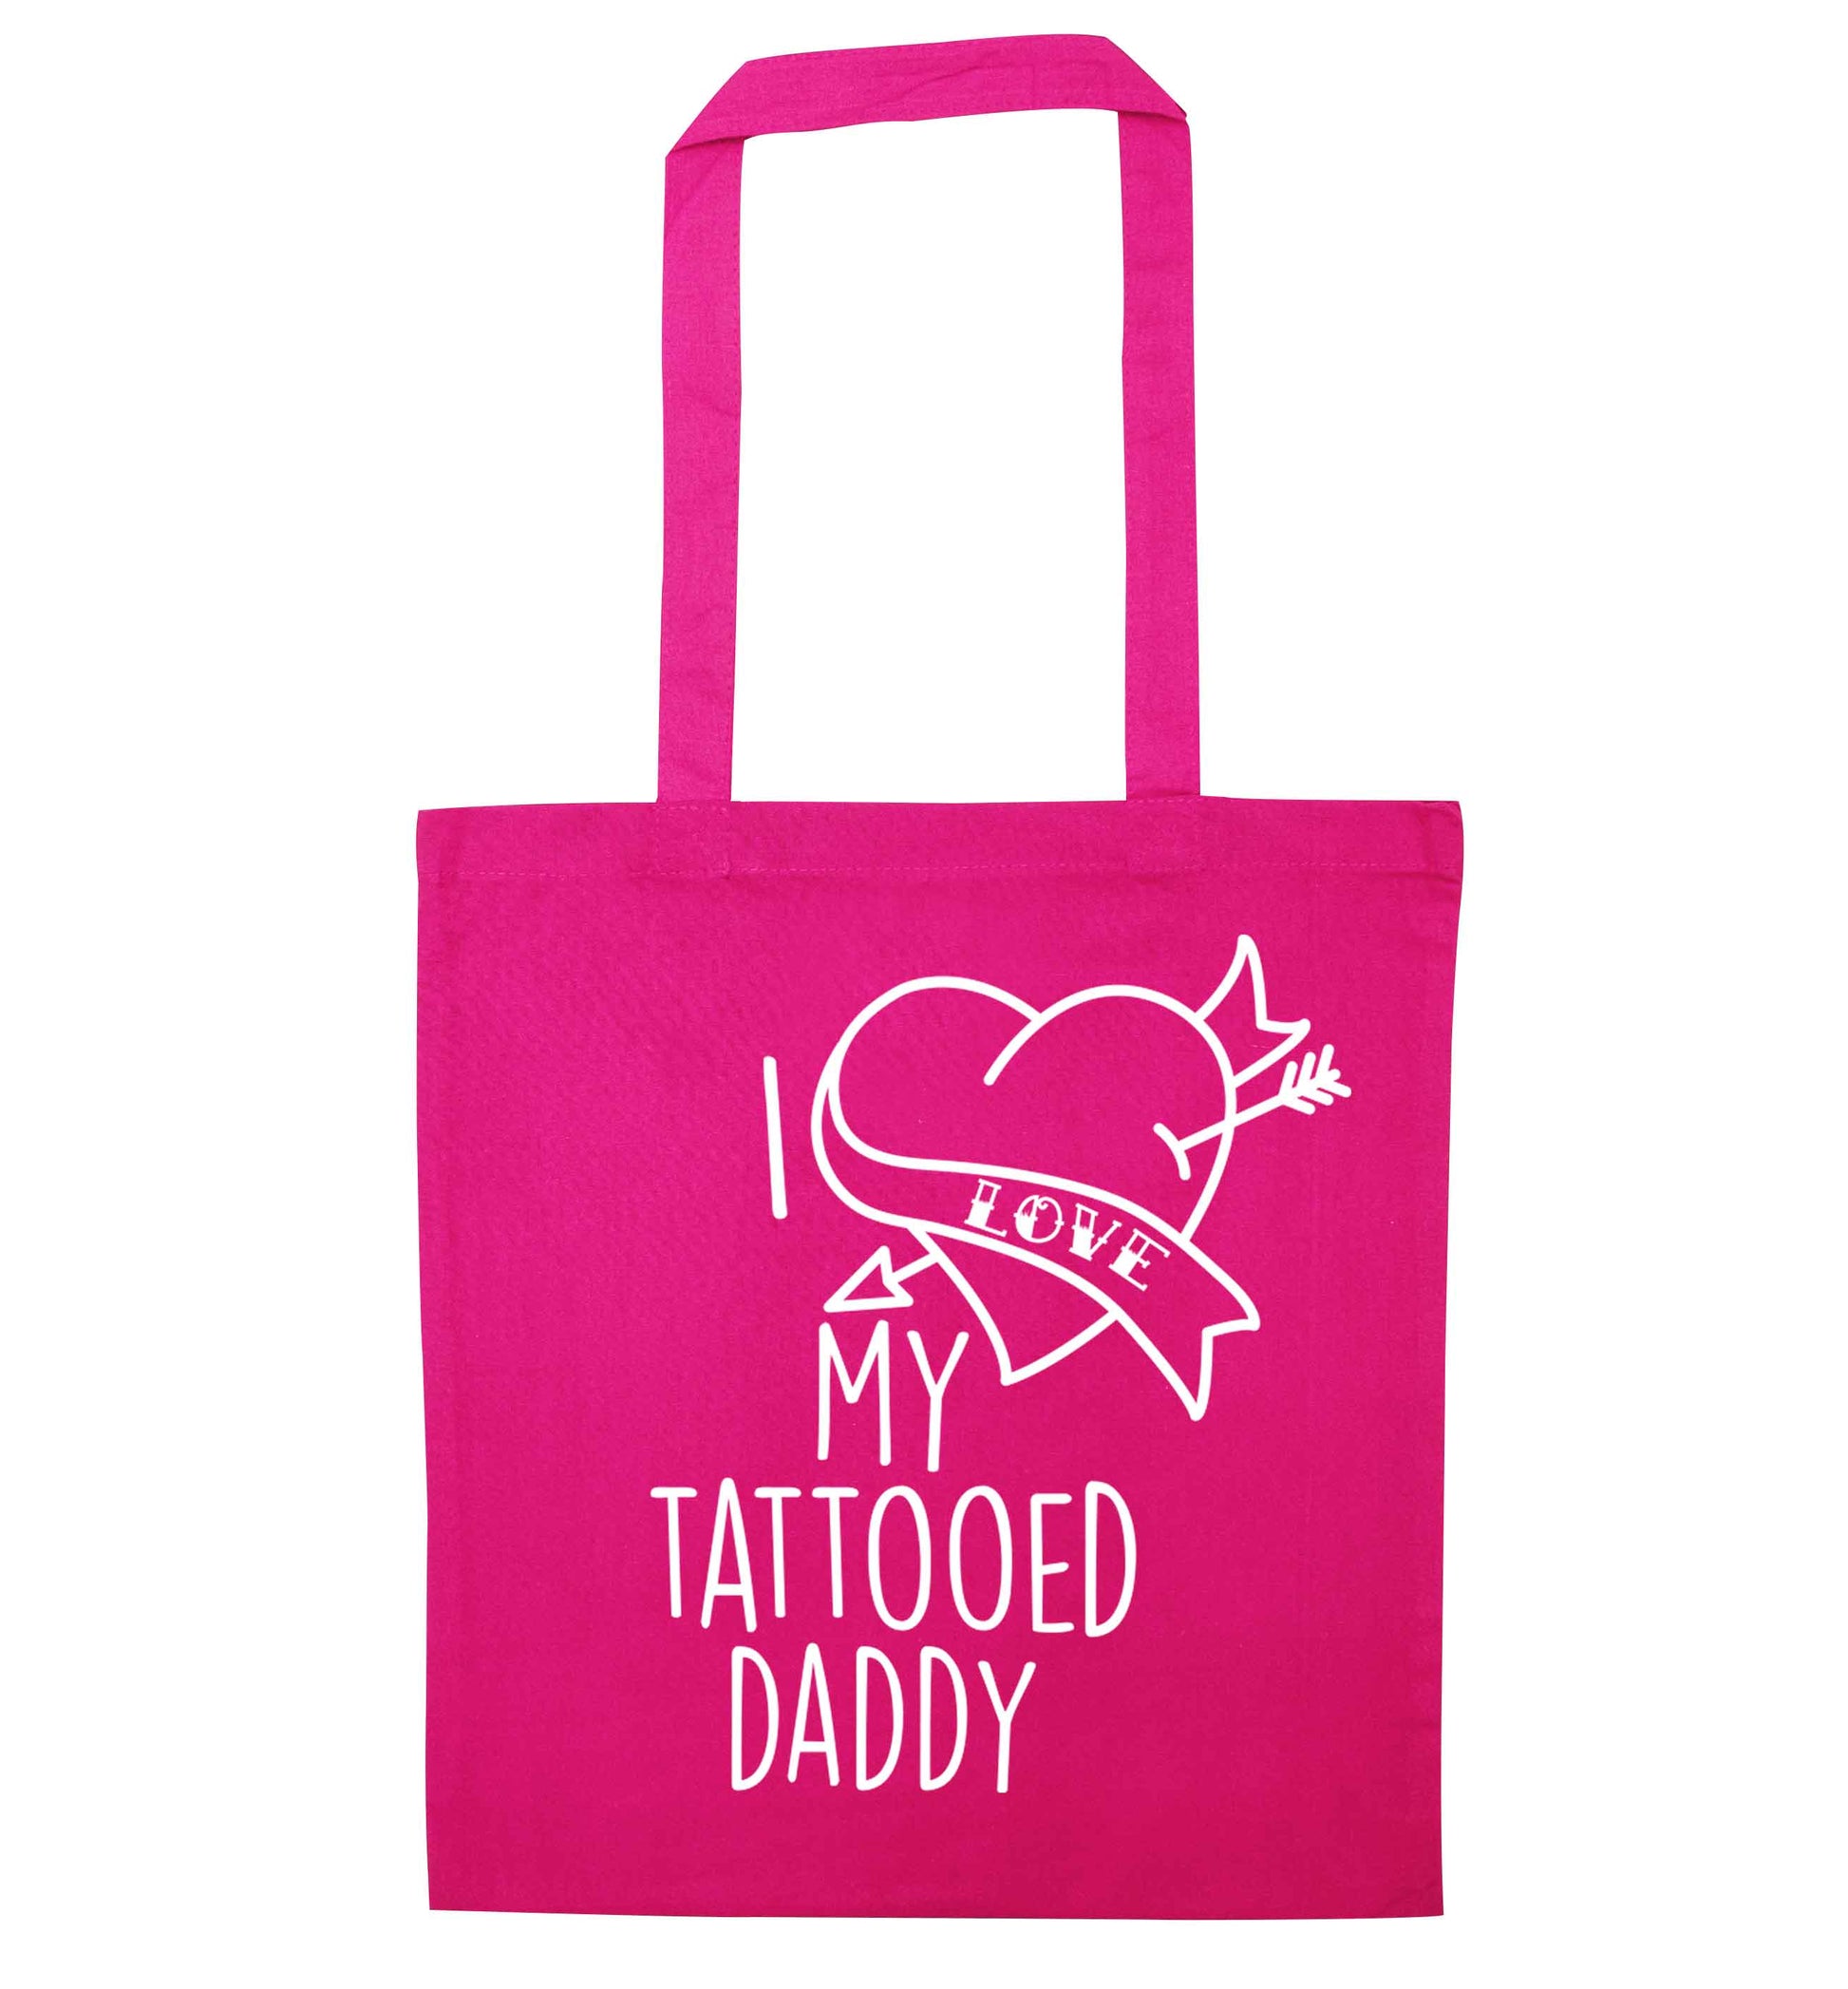 I love my tattooed daddy pink tote bag